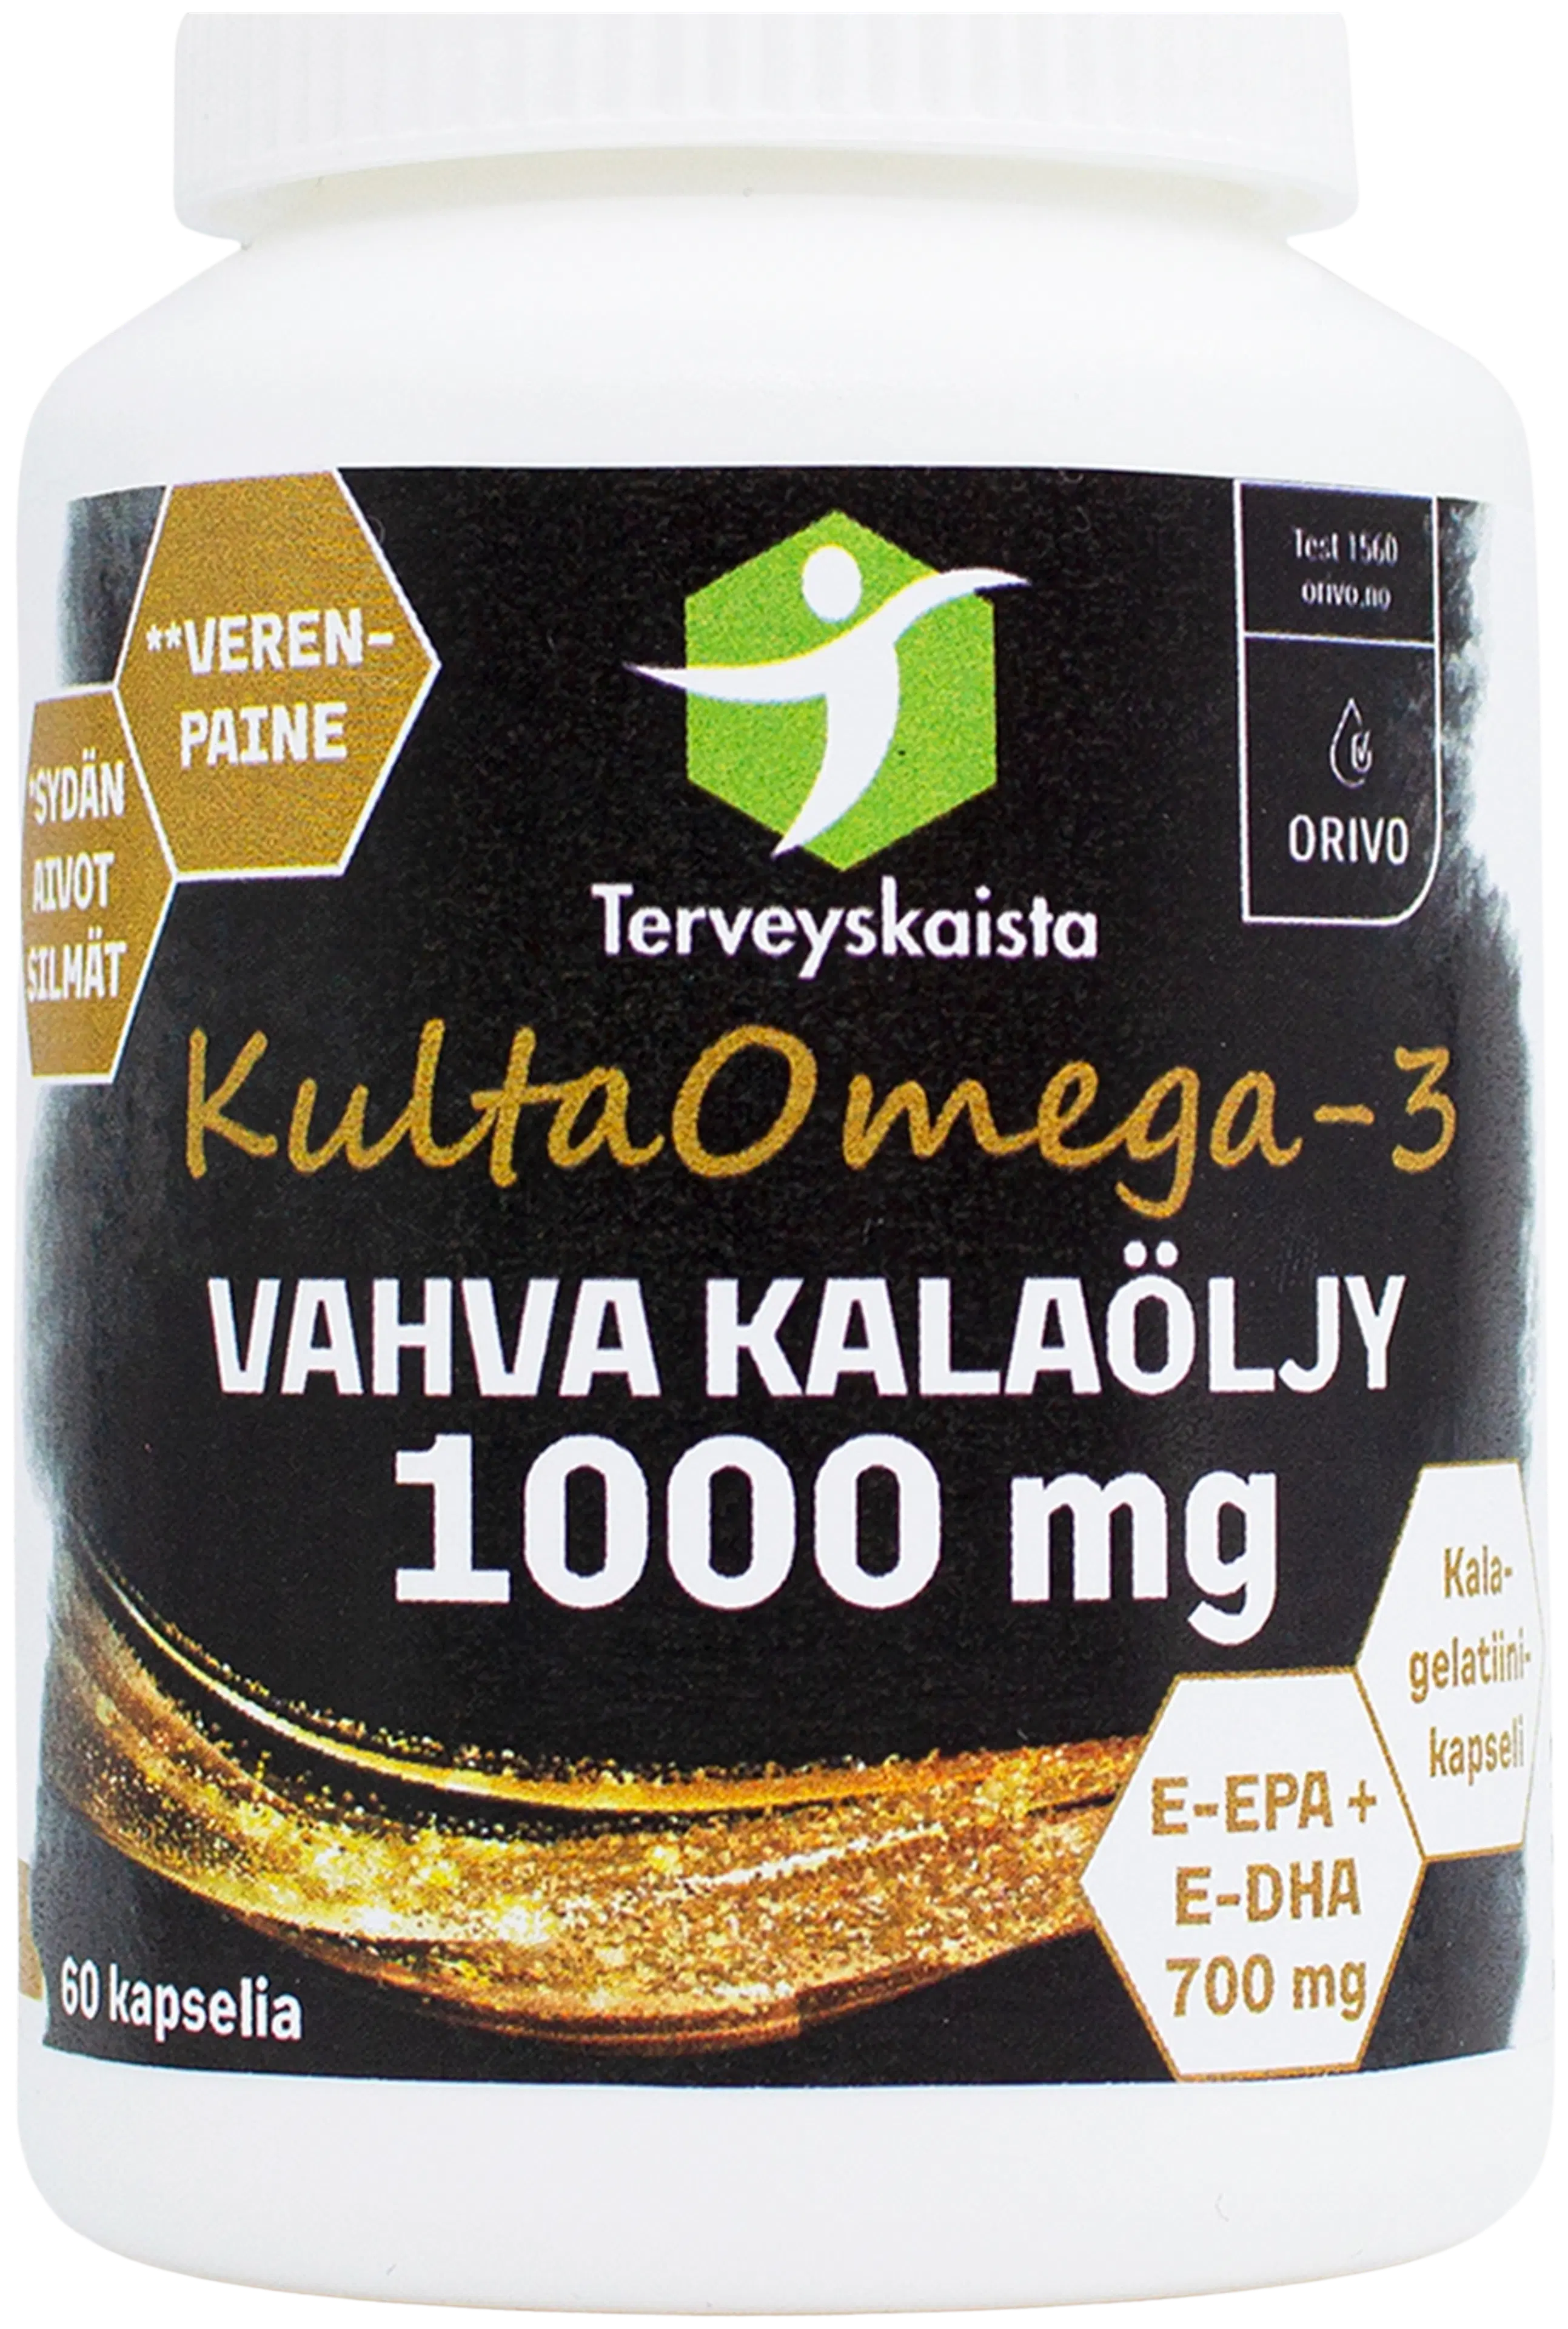 Terveyskaistan KultaOmega-3 Vahva kalaöljy 1000 mg 60 kaps.